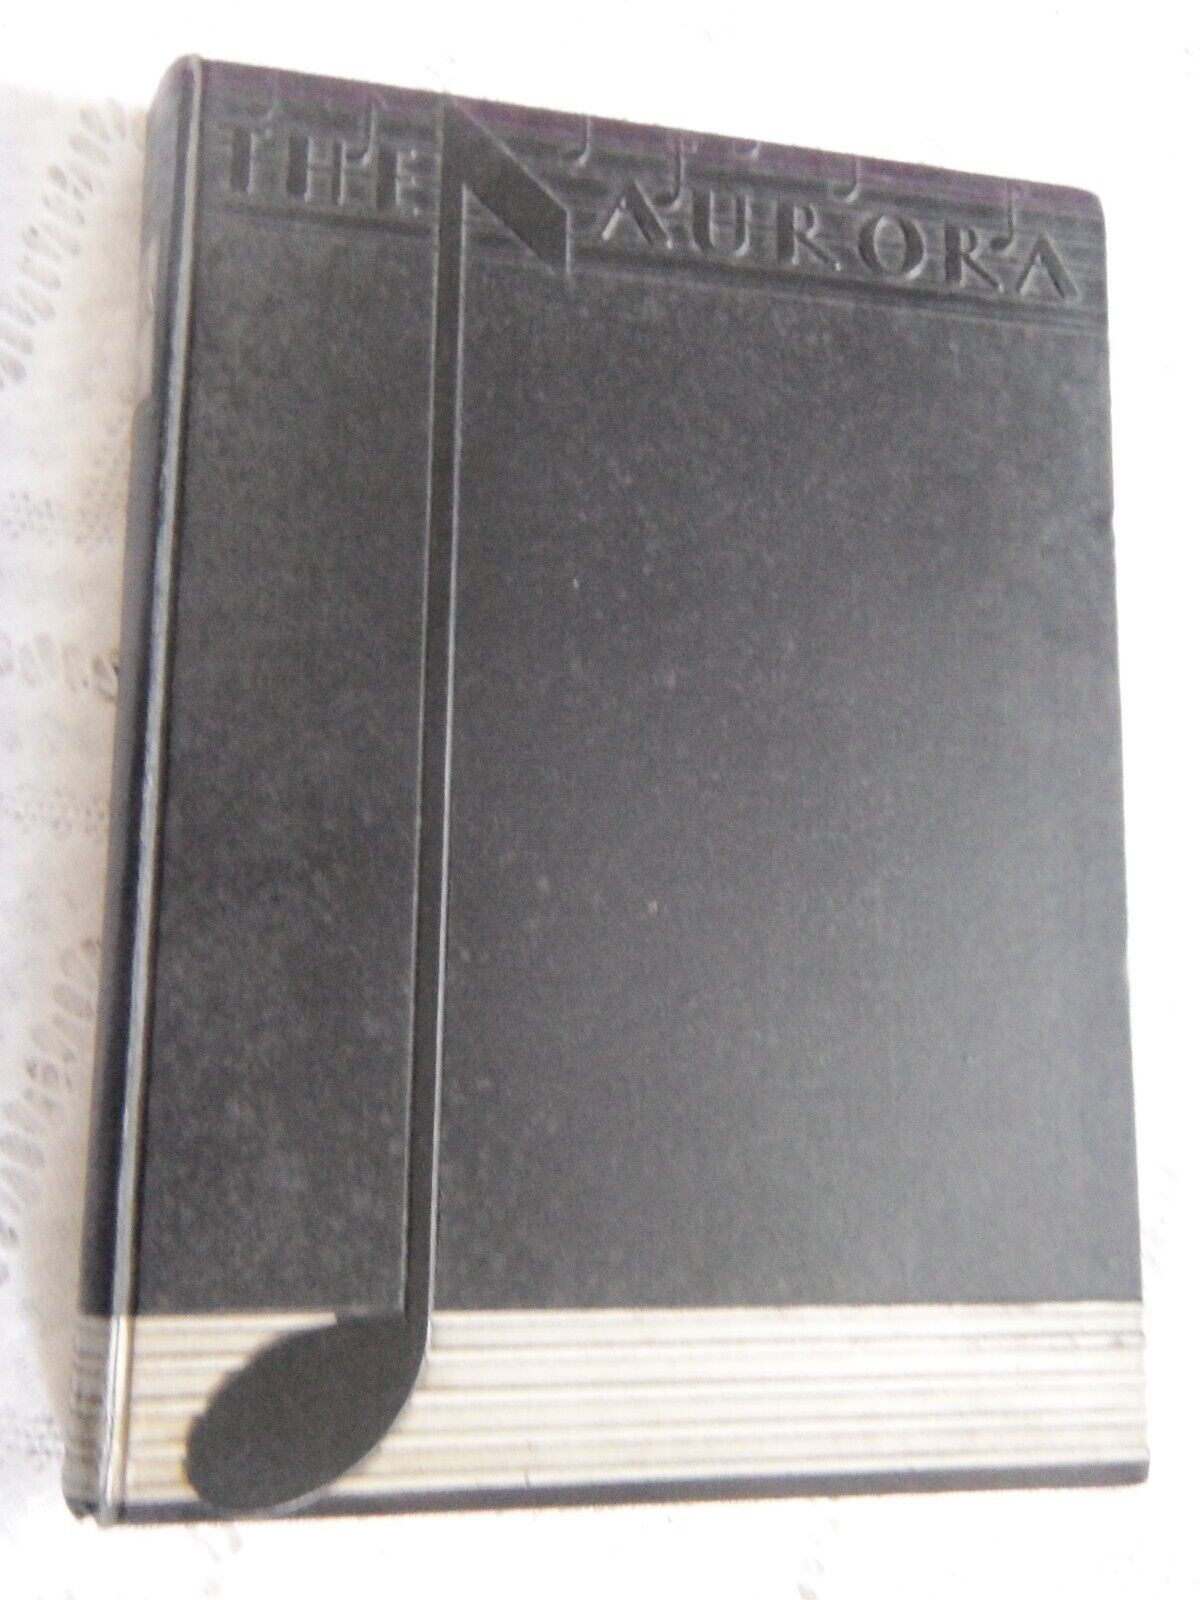 1931 AURORA Yearbook Michigan State Normal College Ypsilanti Michigan Art Deco